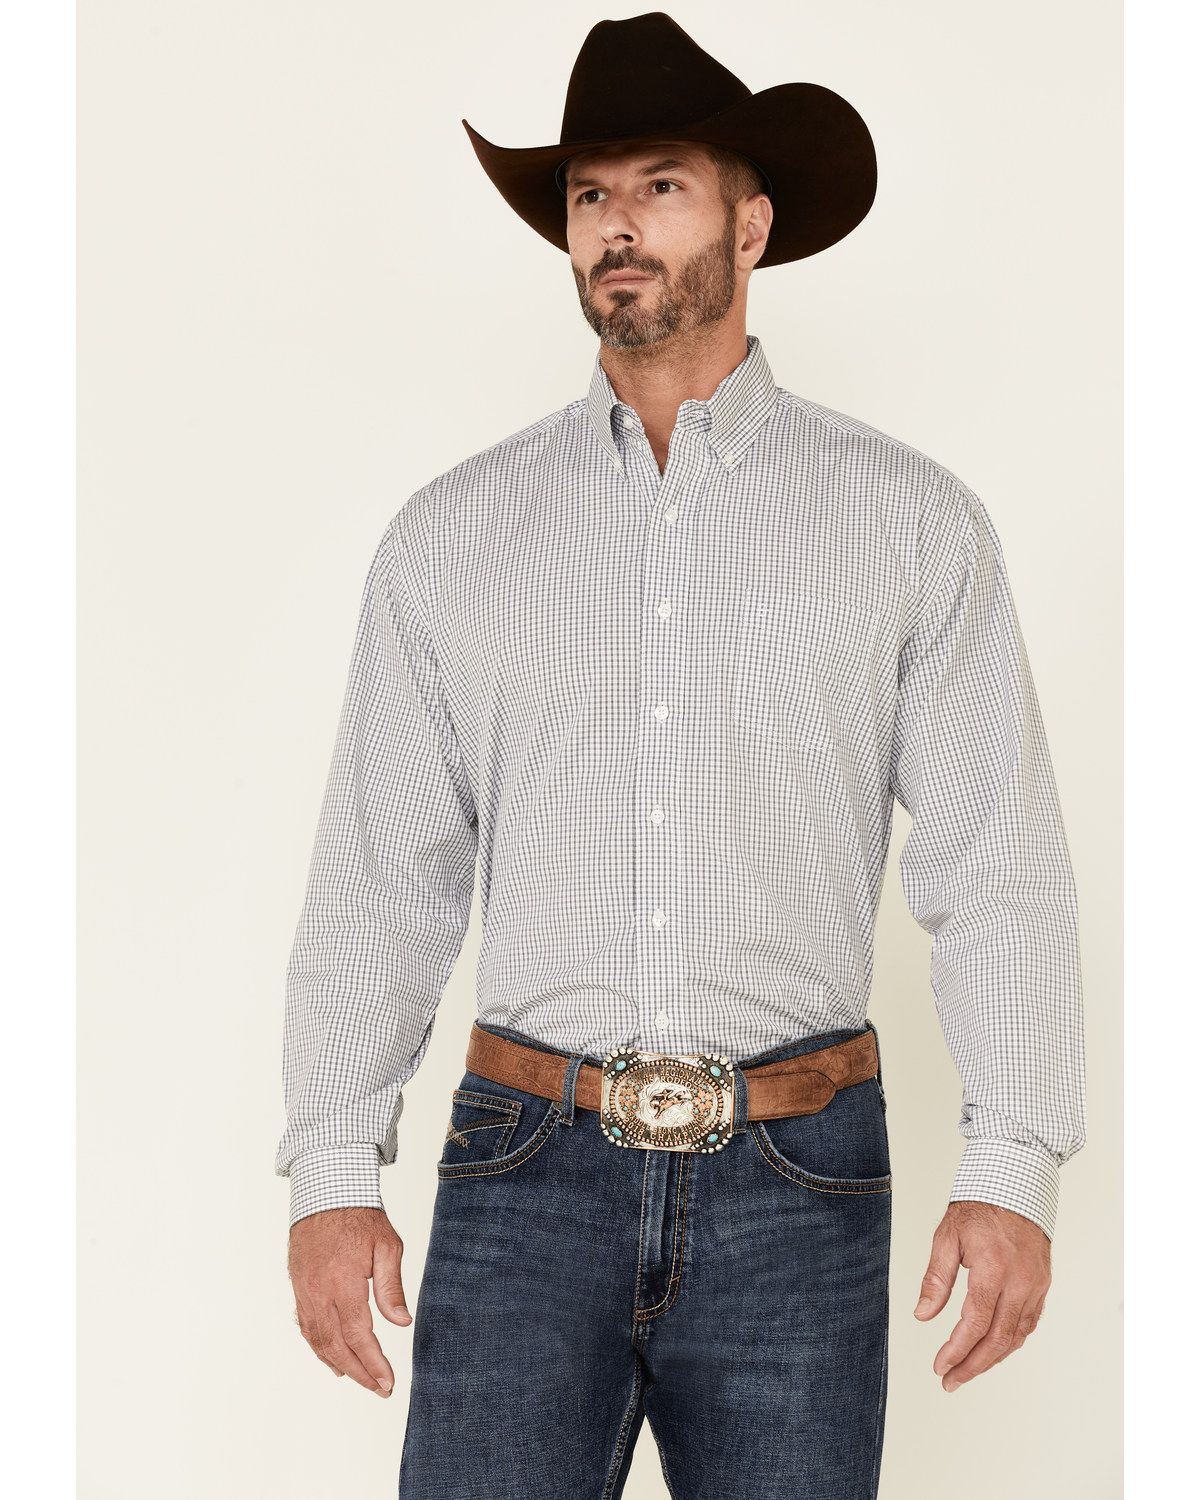 Stetson Men's Small Check Plaid Print Long Sleeve Button Down Western Shirt